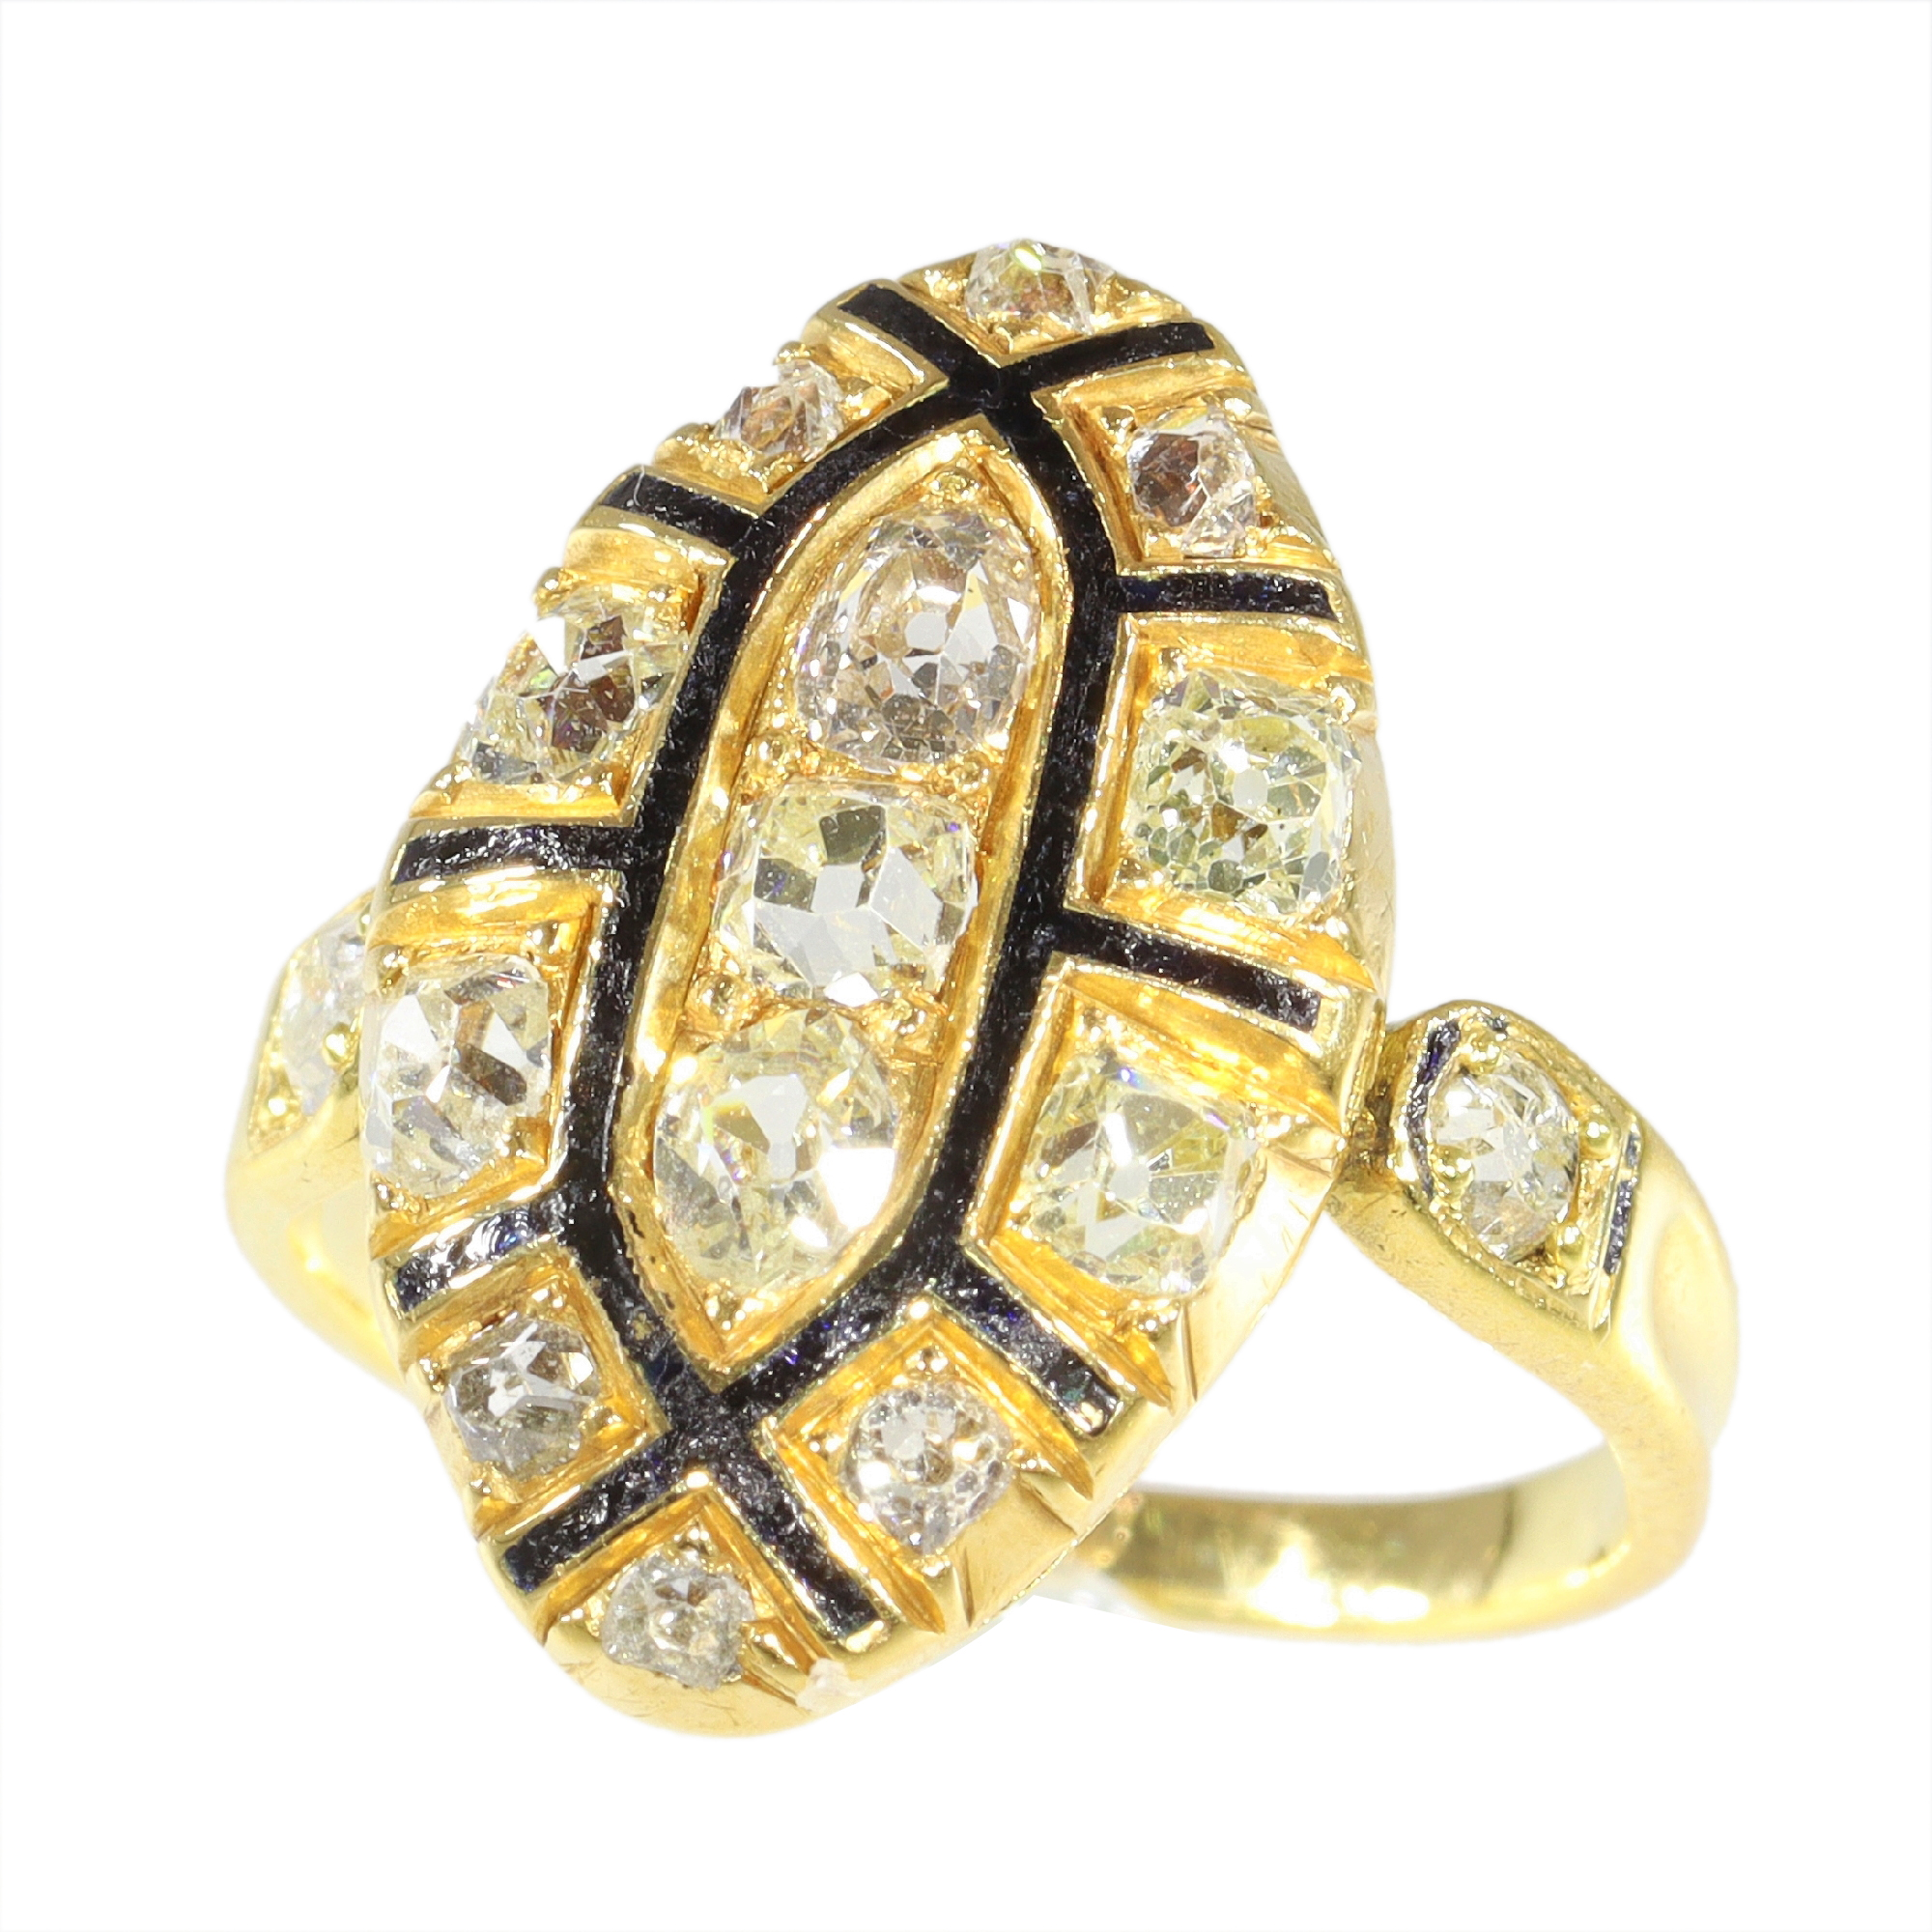 Ornate Elegance: A Diamond-Encrusted Rococo Ring